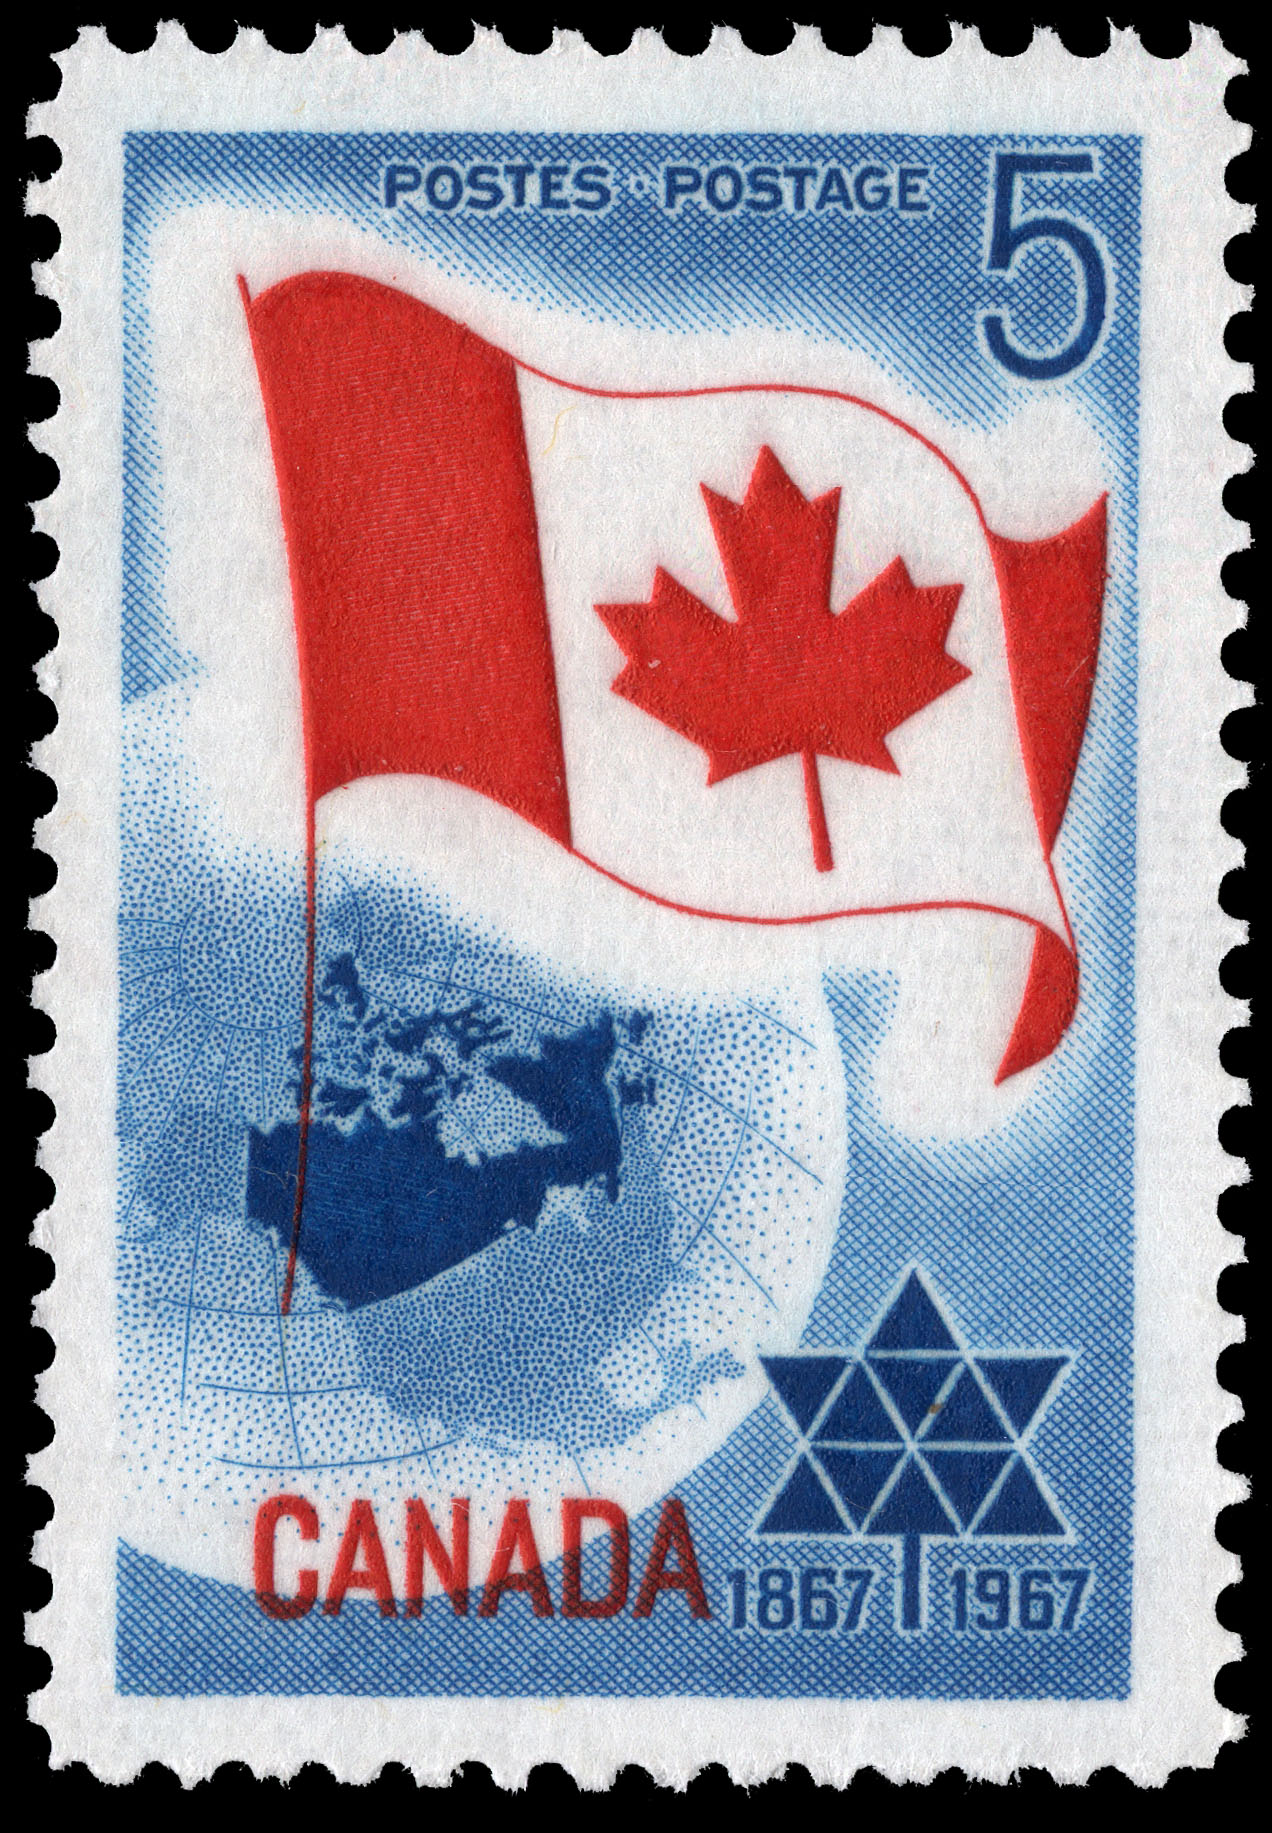 Centennial, 1867-1967 - Canada Postage Stamp